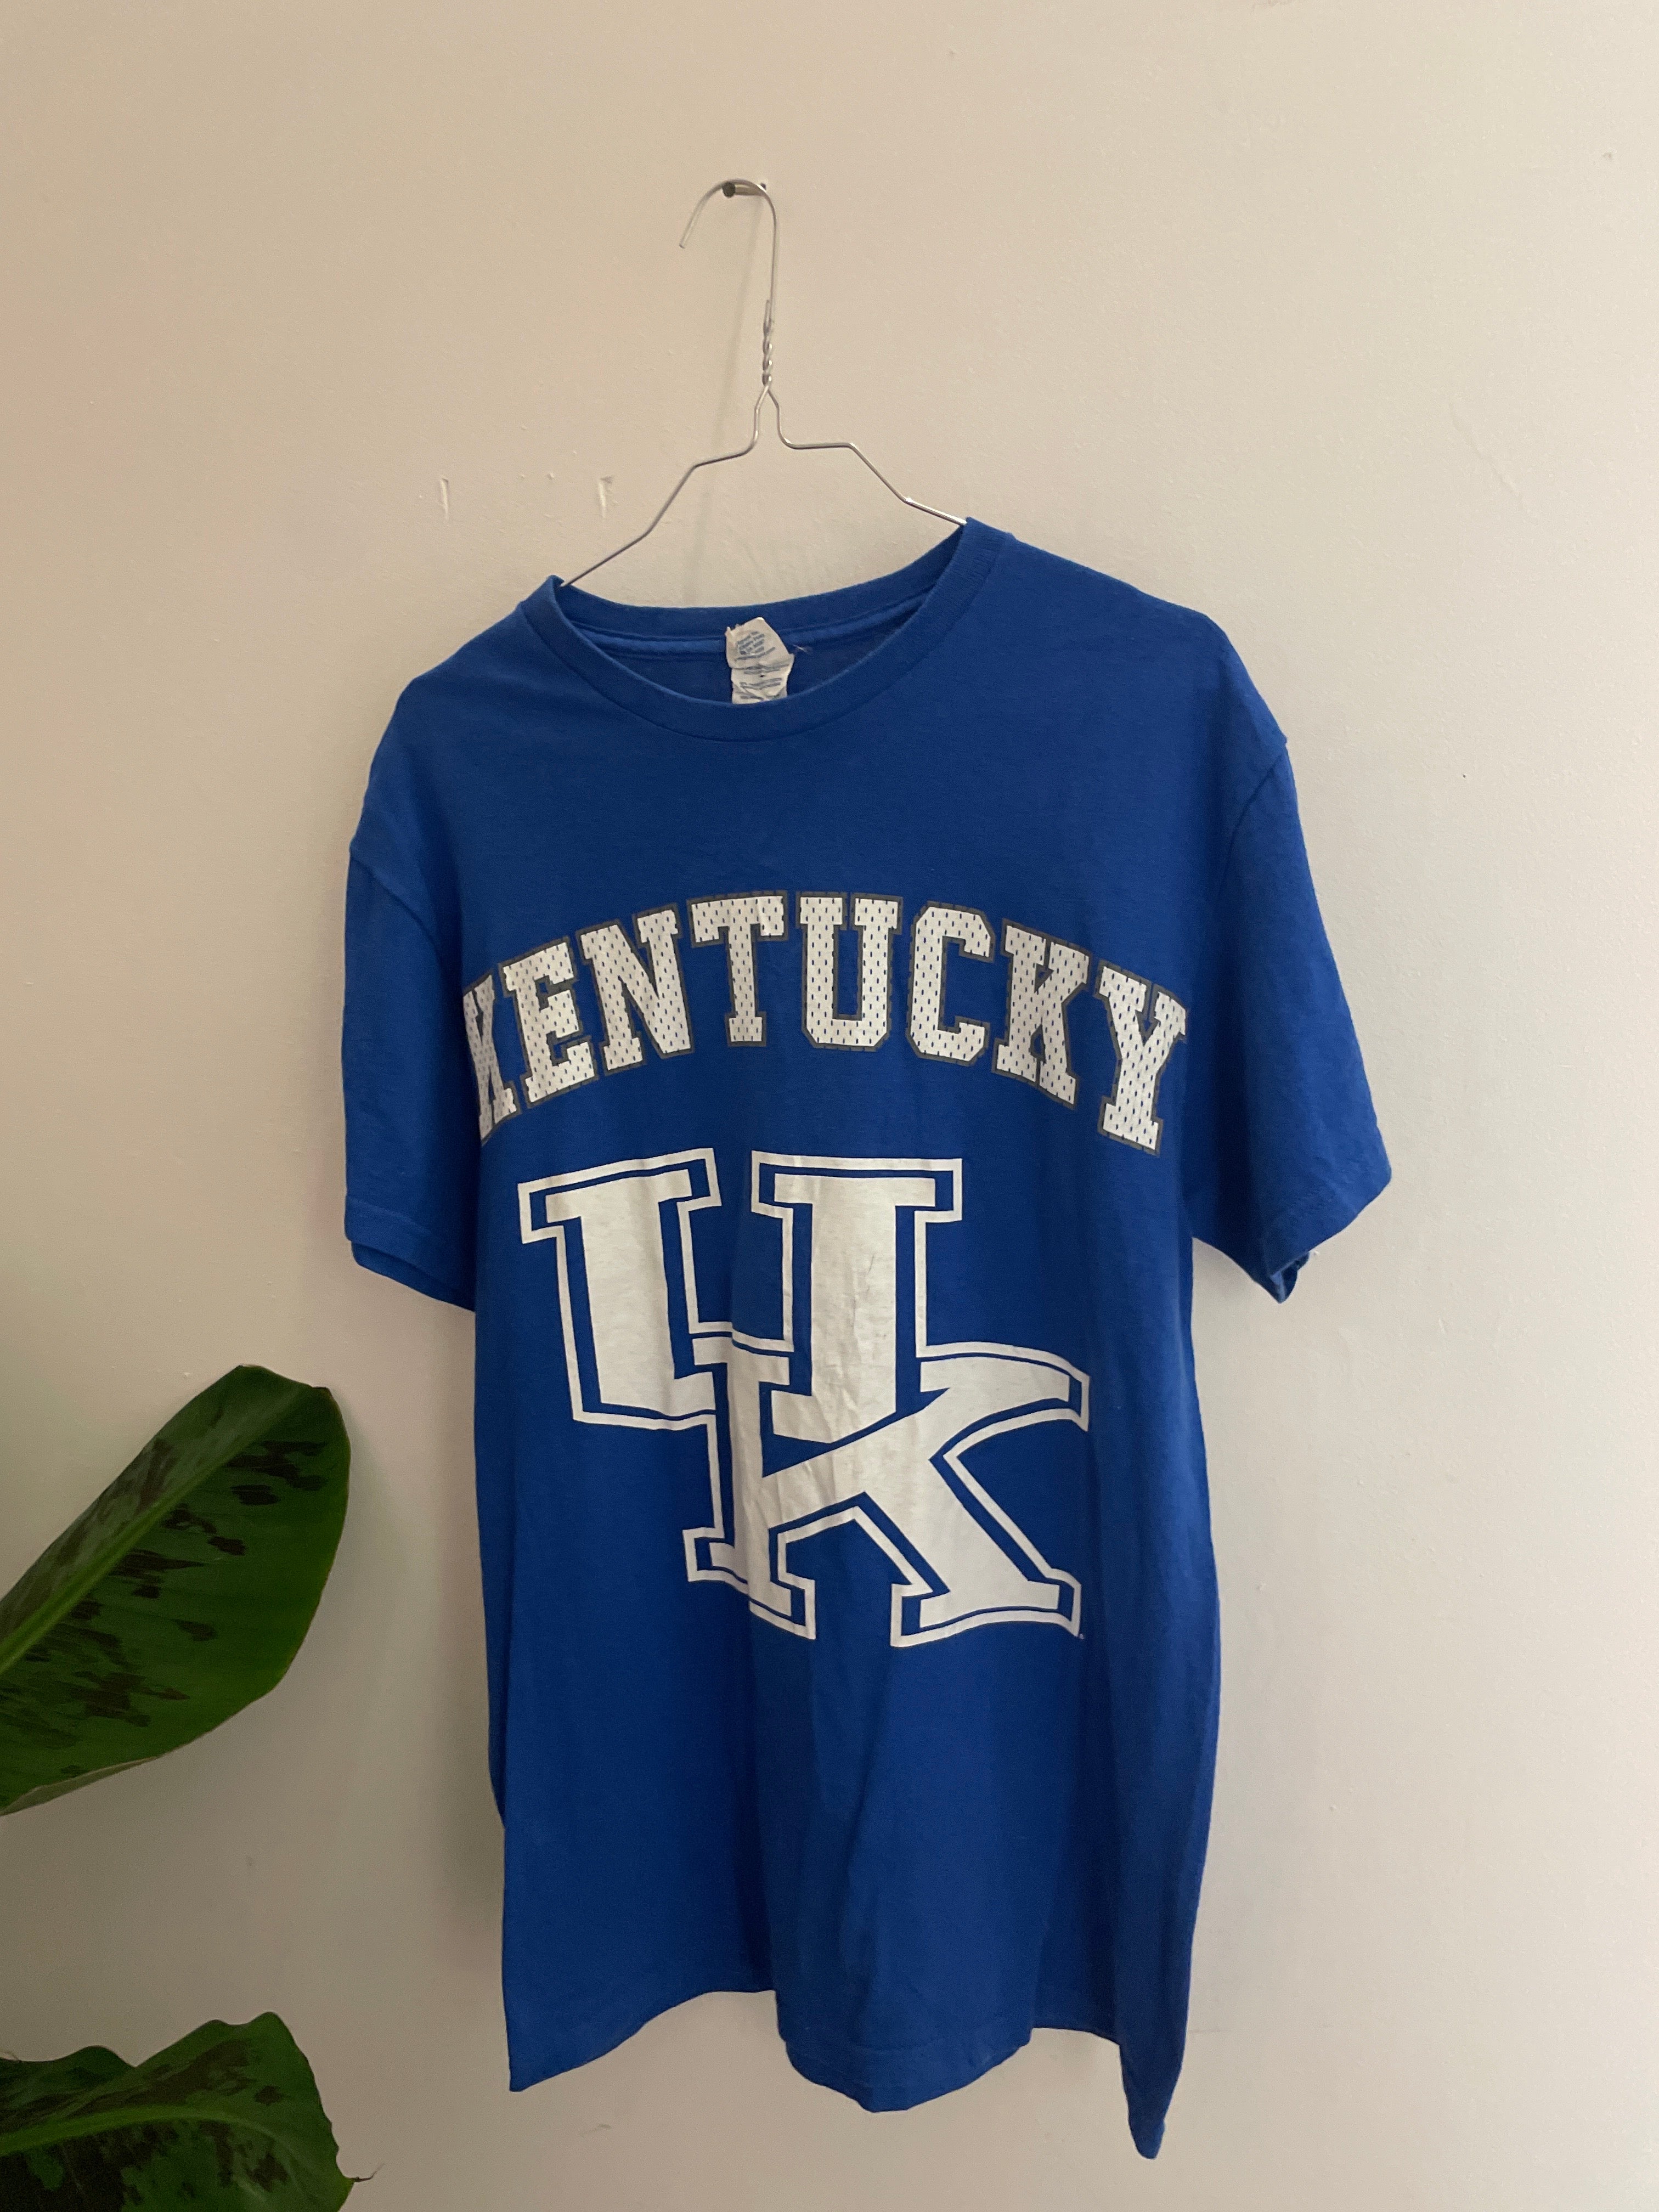 Vintage Kentucky Uk blue graphics tshirt size M